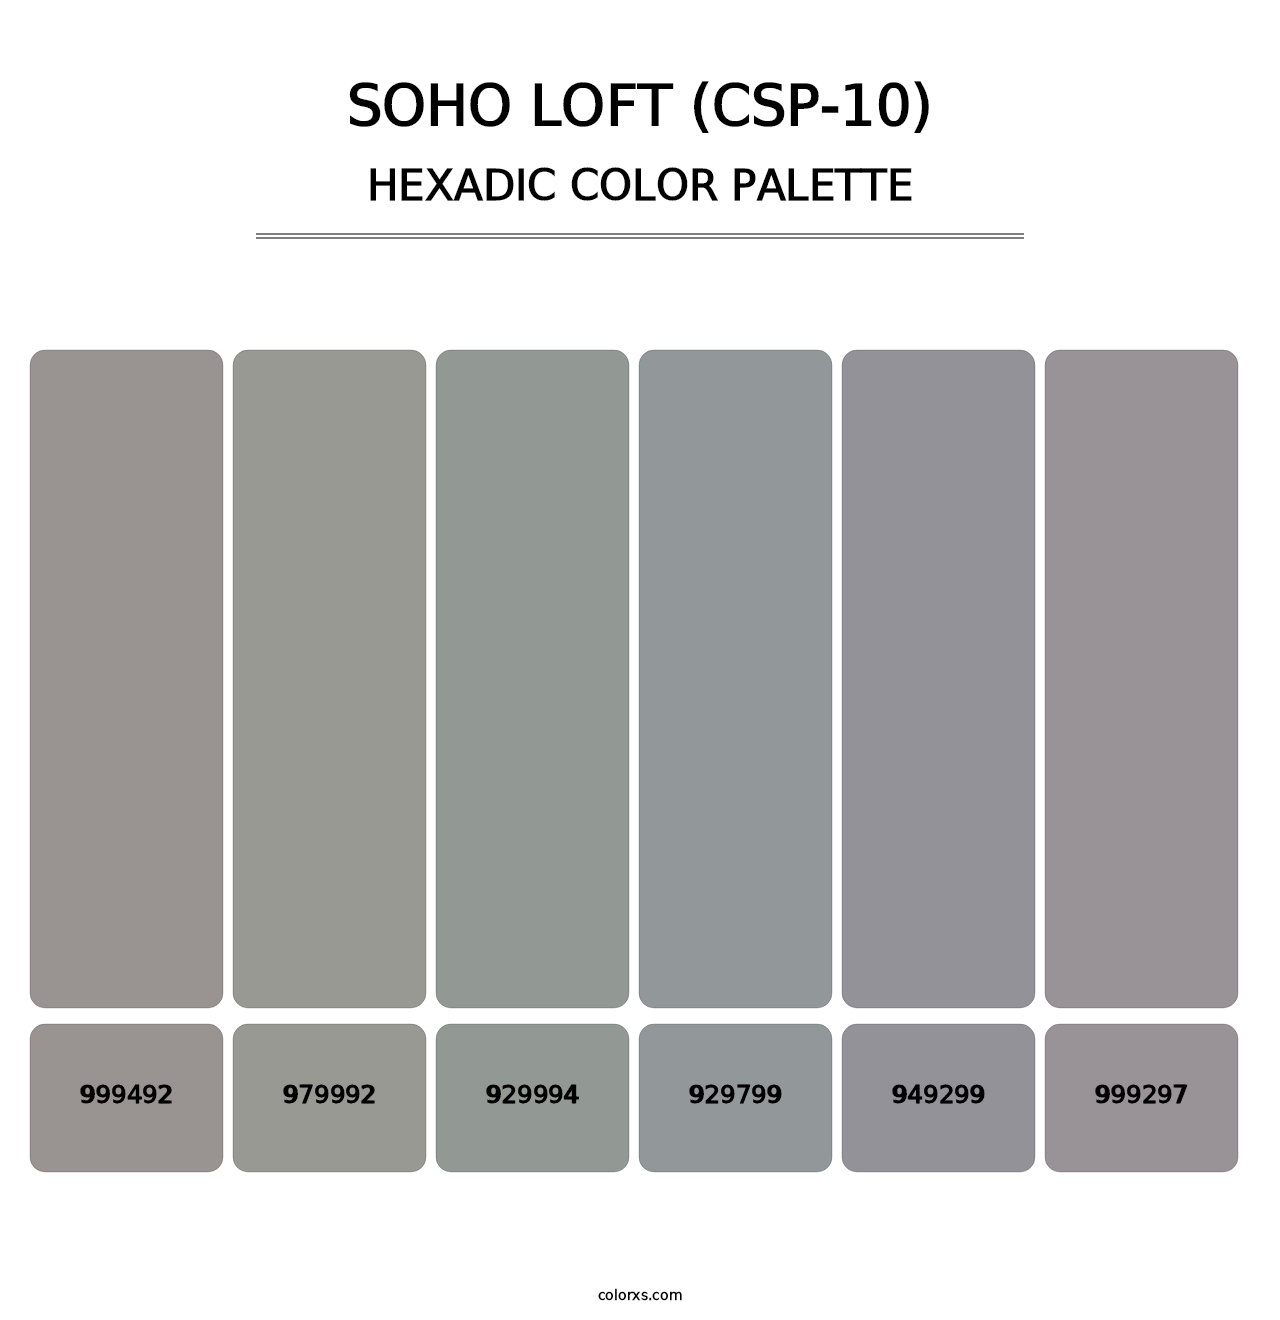 Soho Loft (CSP-10) - Hexadic Color Palette